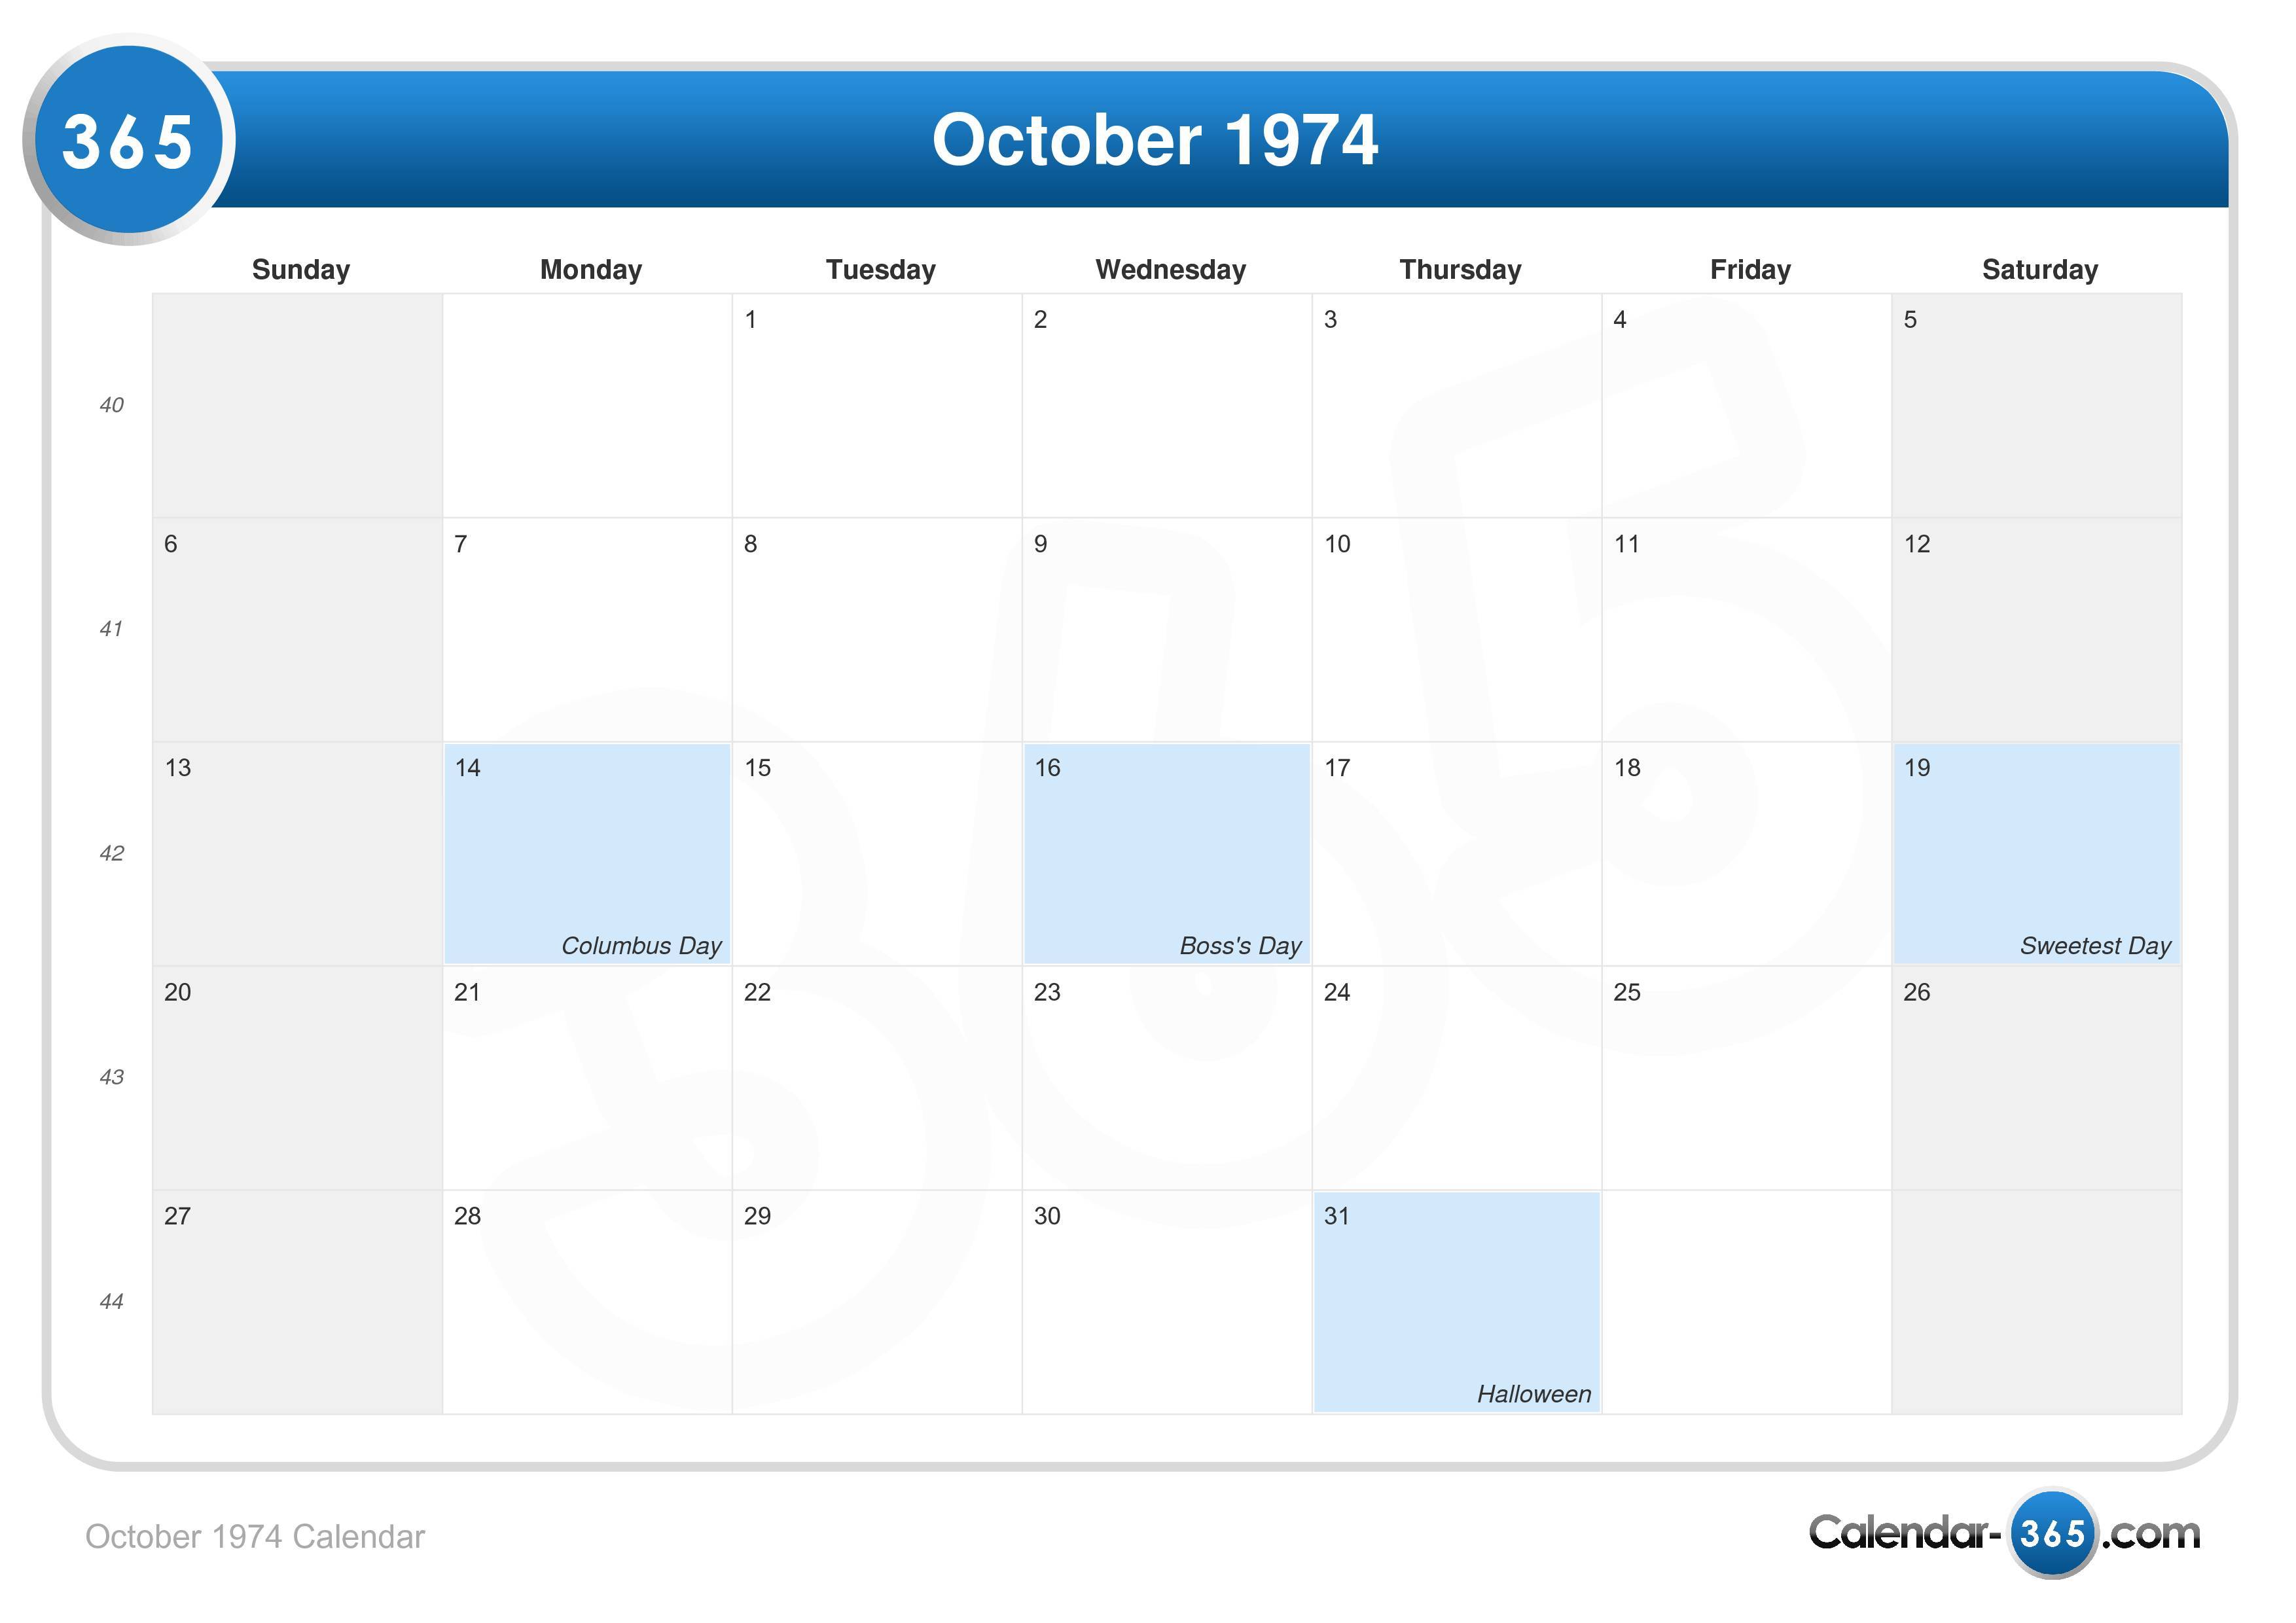 October 1974 Calendar